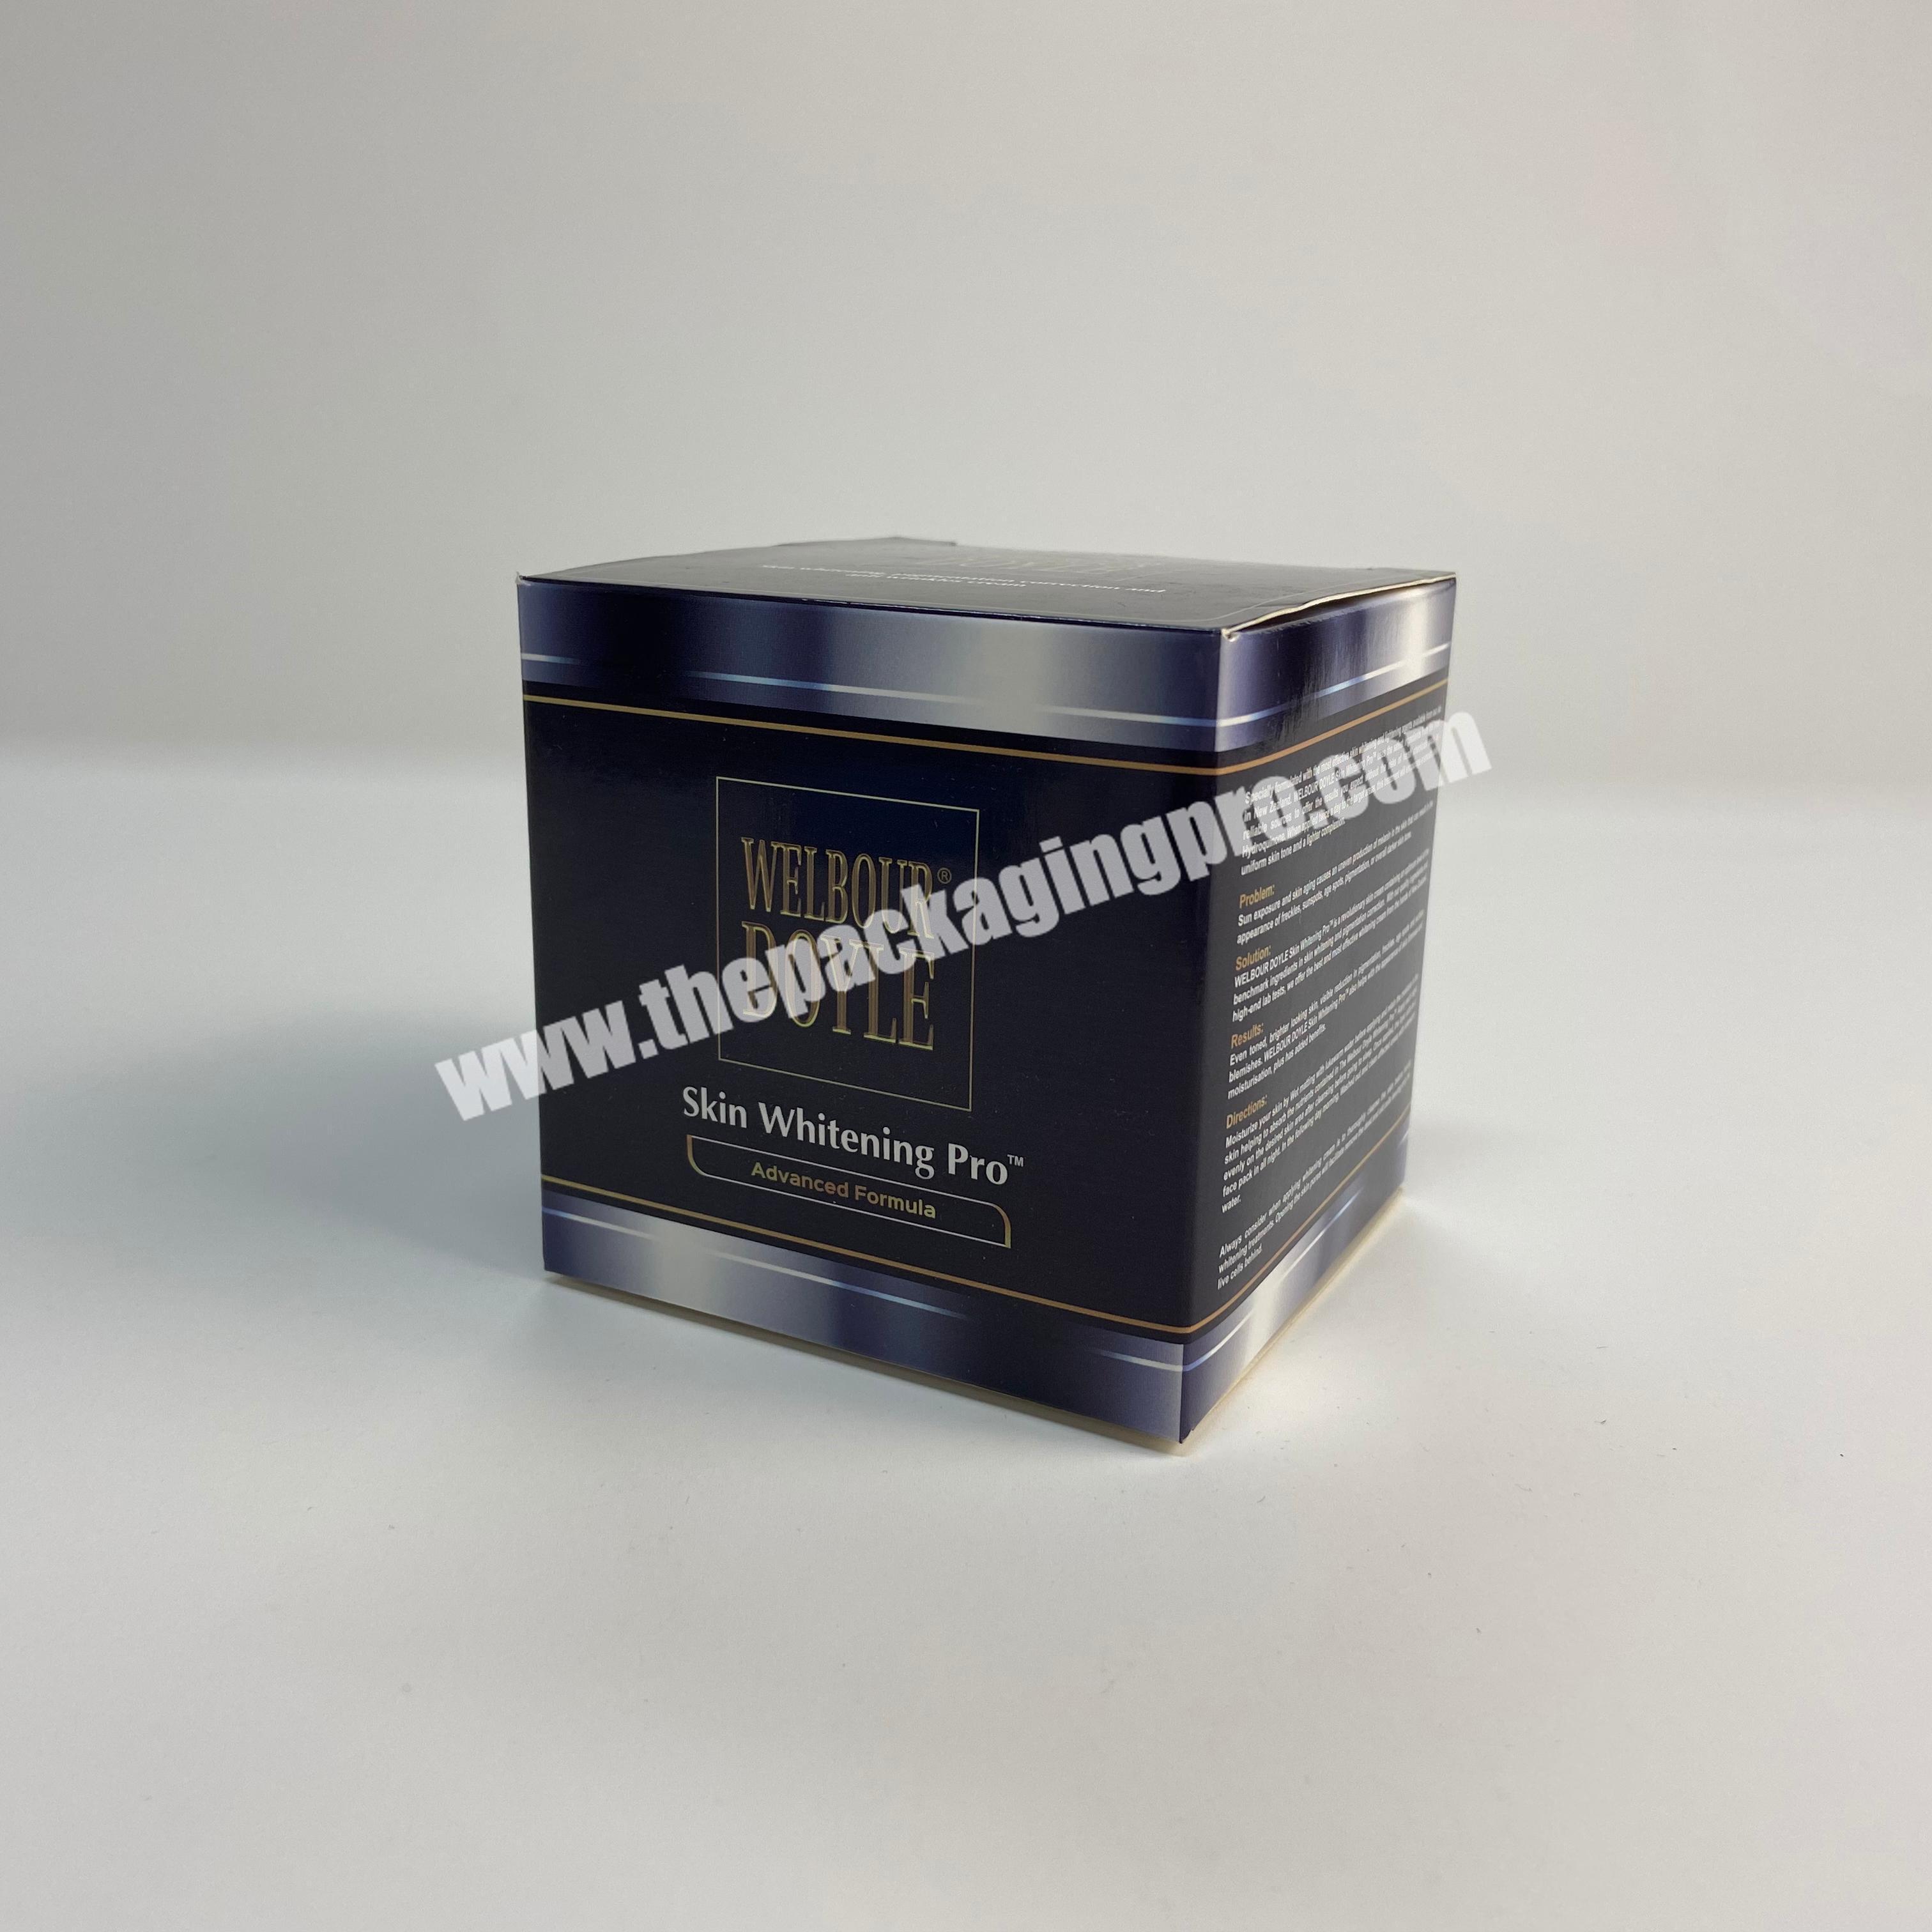 Hot sale custom made brand logo printed coated paper face cream packaging box